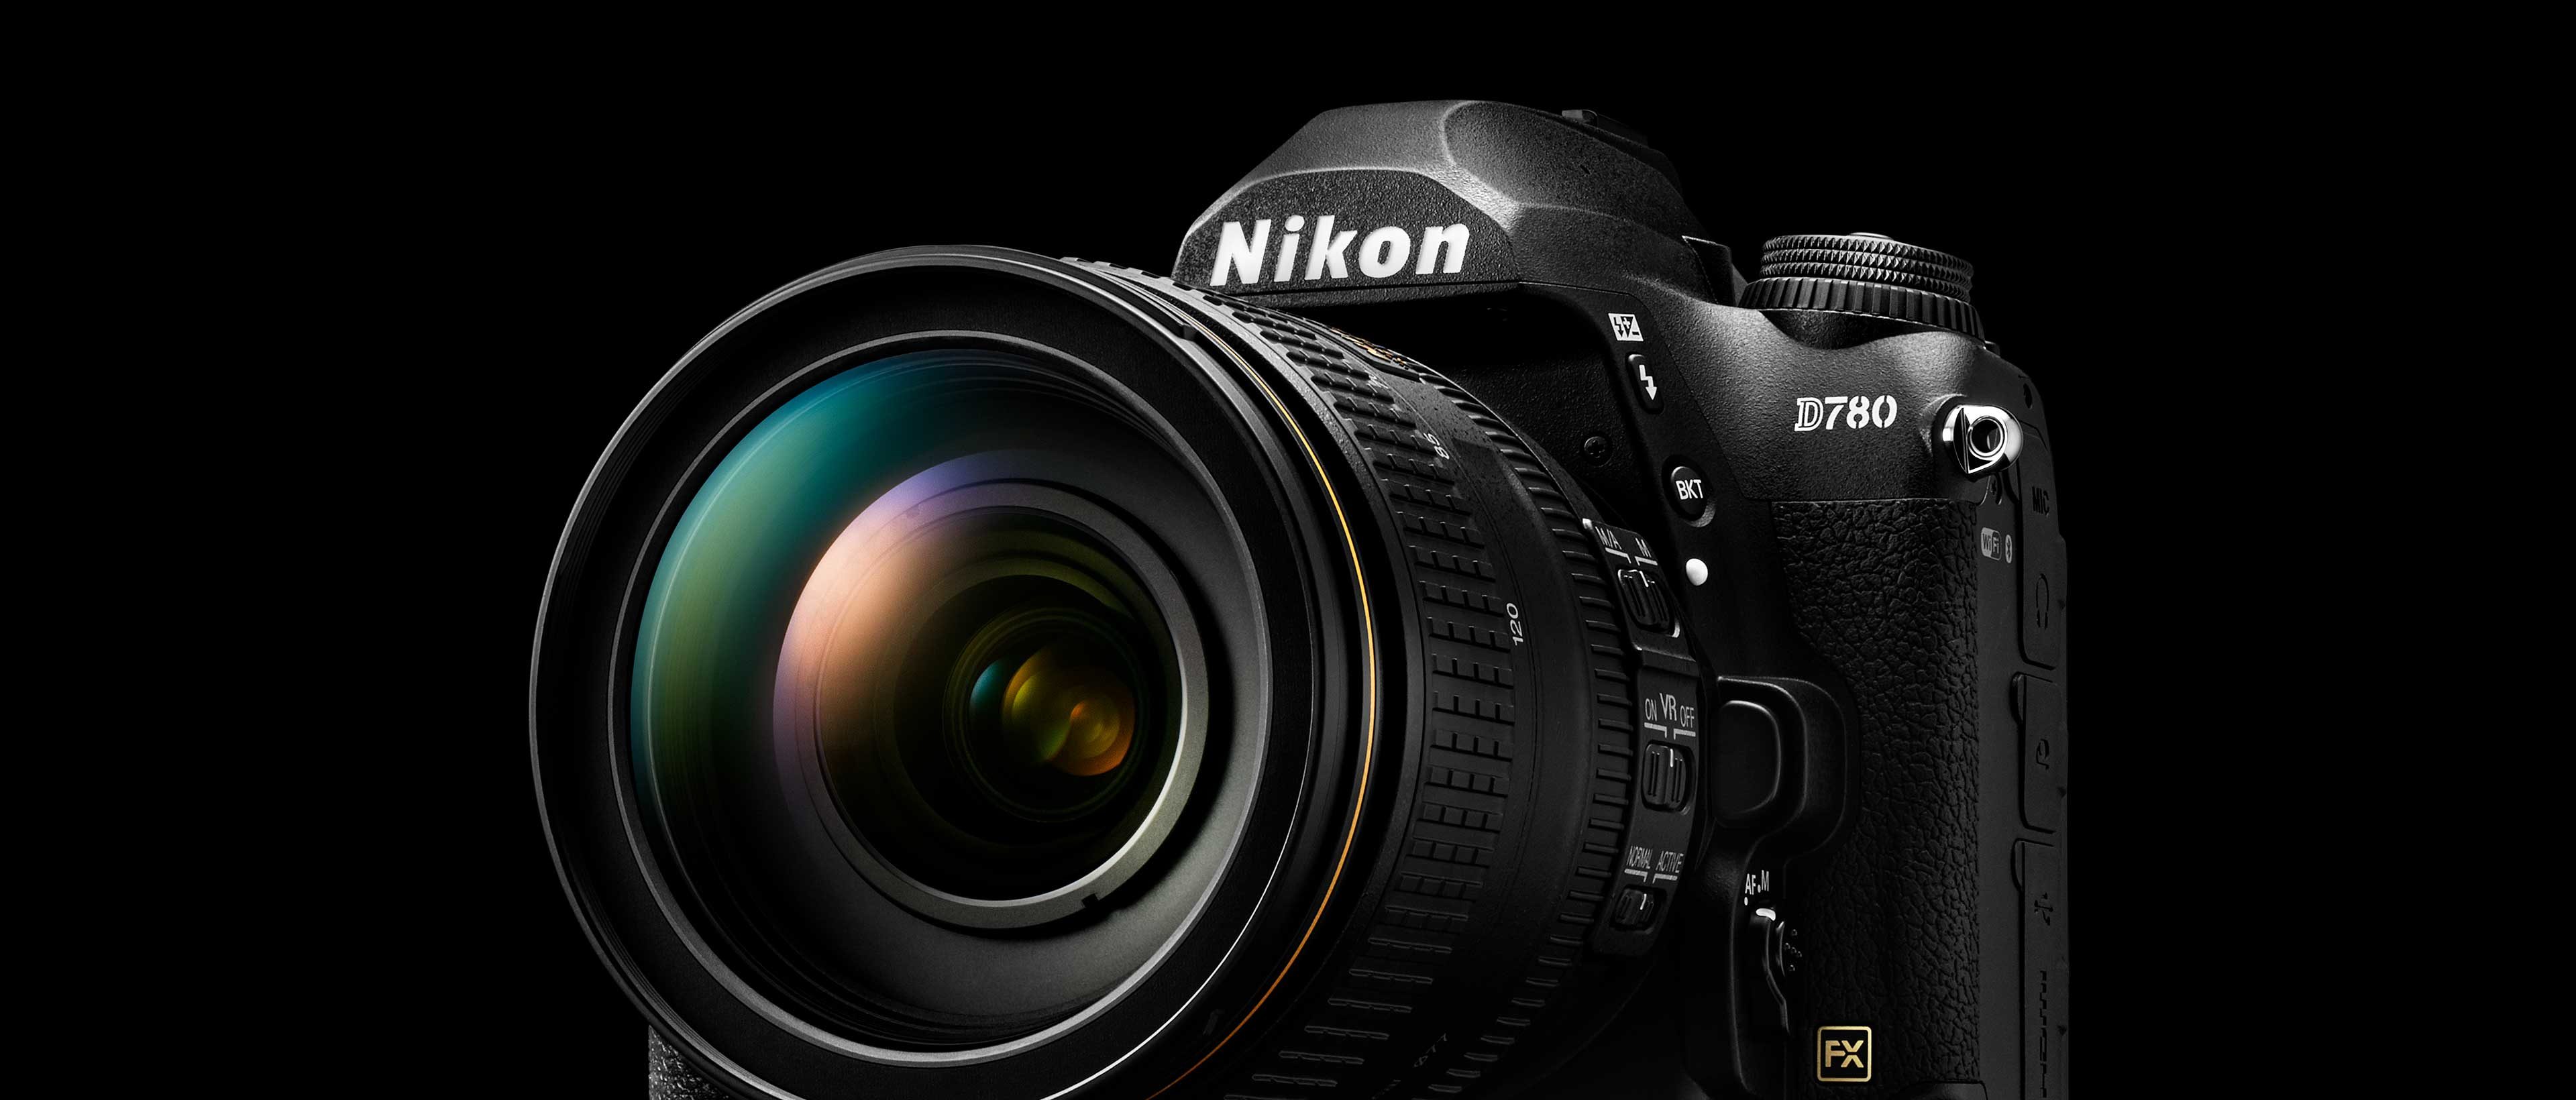 Preview Image: Nikon D780